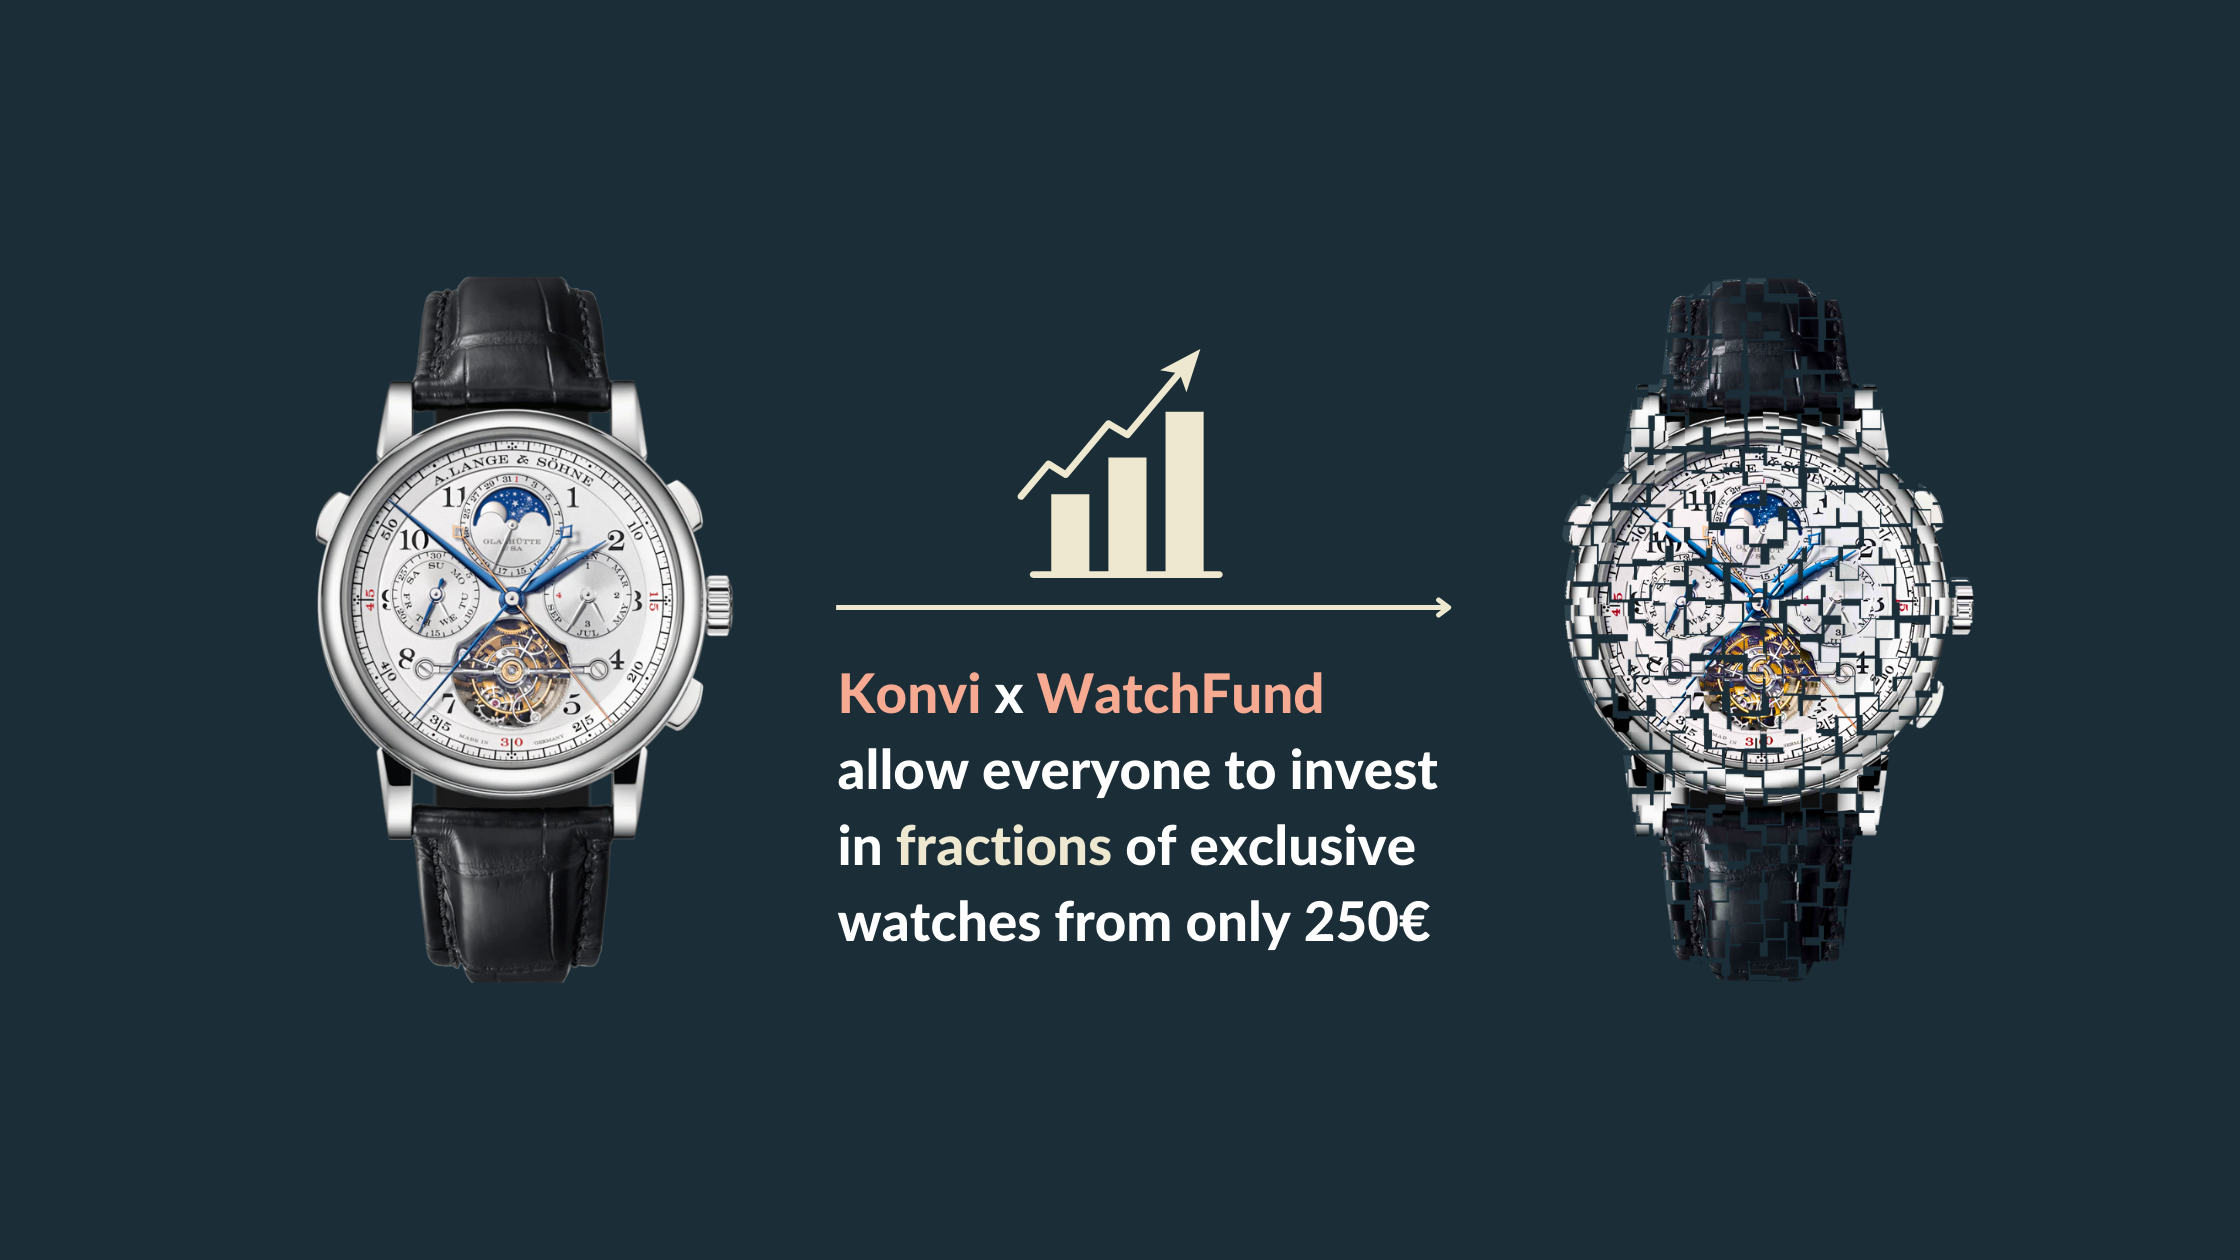 luxury watches worth investing in with WatchFund and Konvi's fractionalisation platform